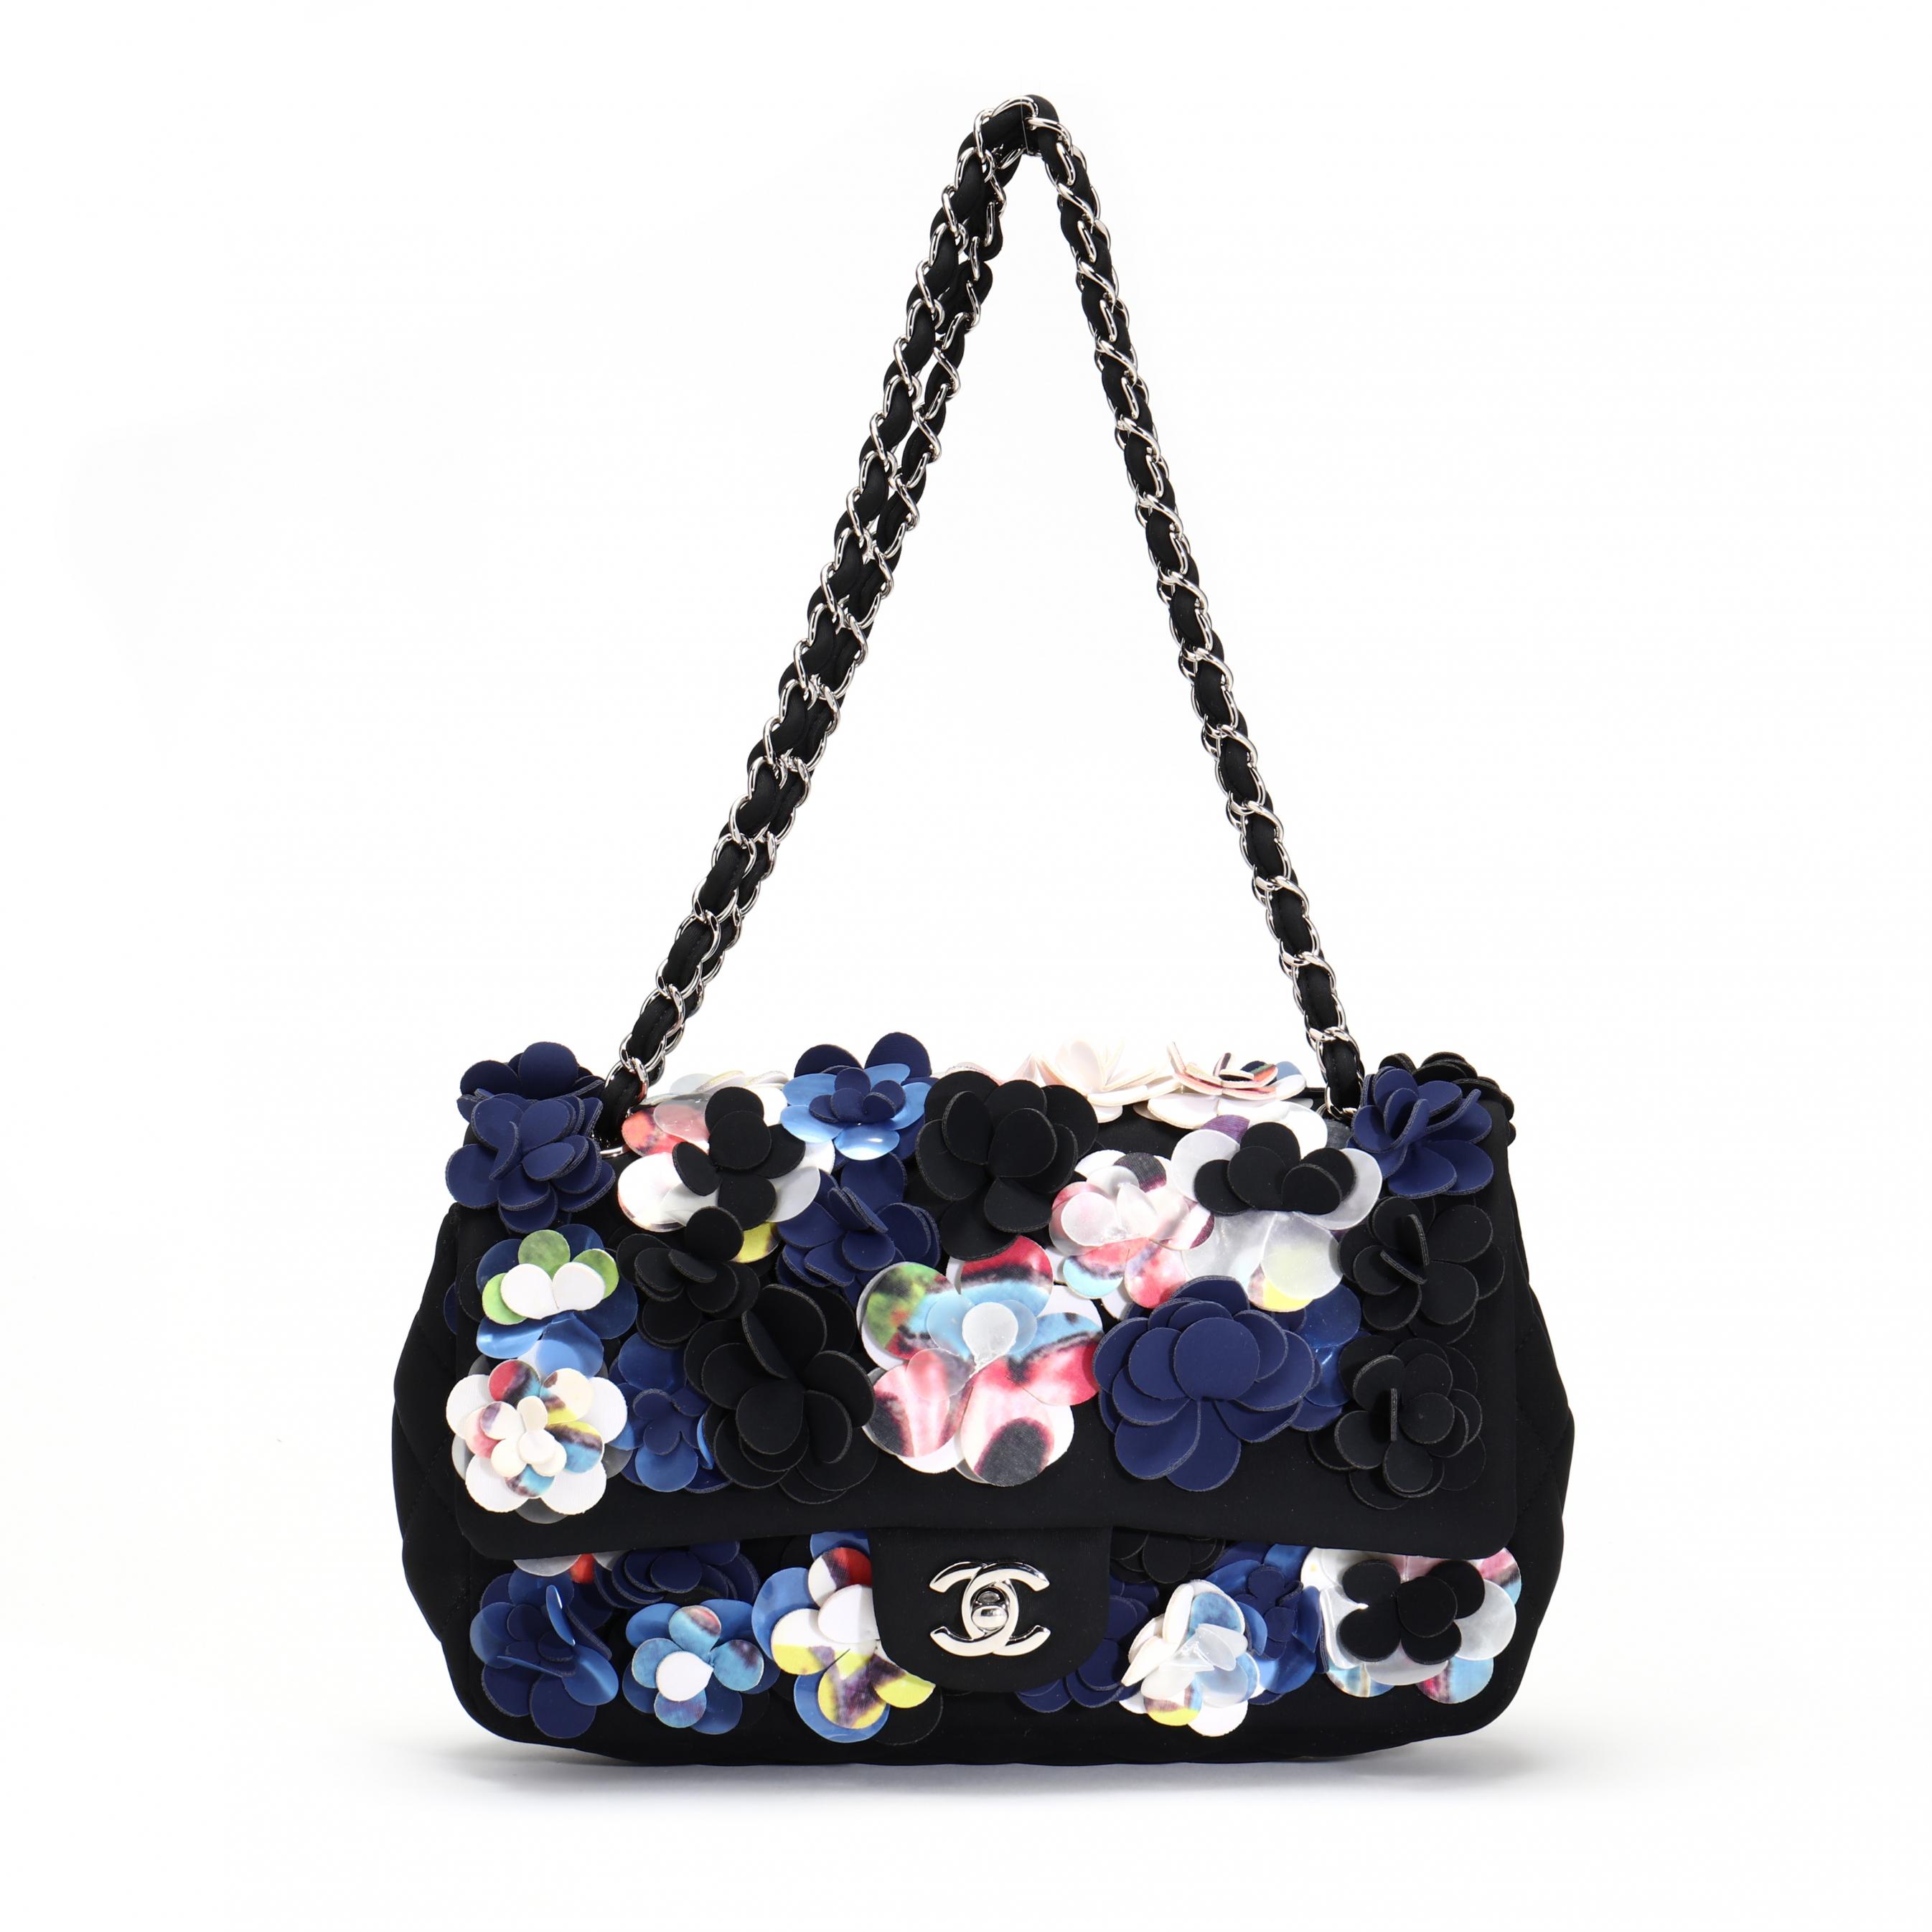 Camellia Flower Single Flap Bag, Chanel (Lot 1019 - Holiday